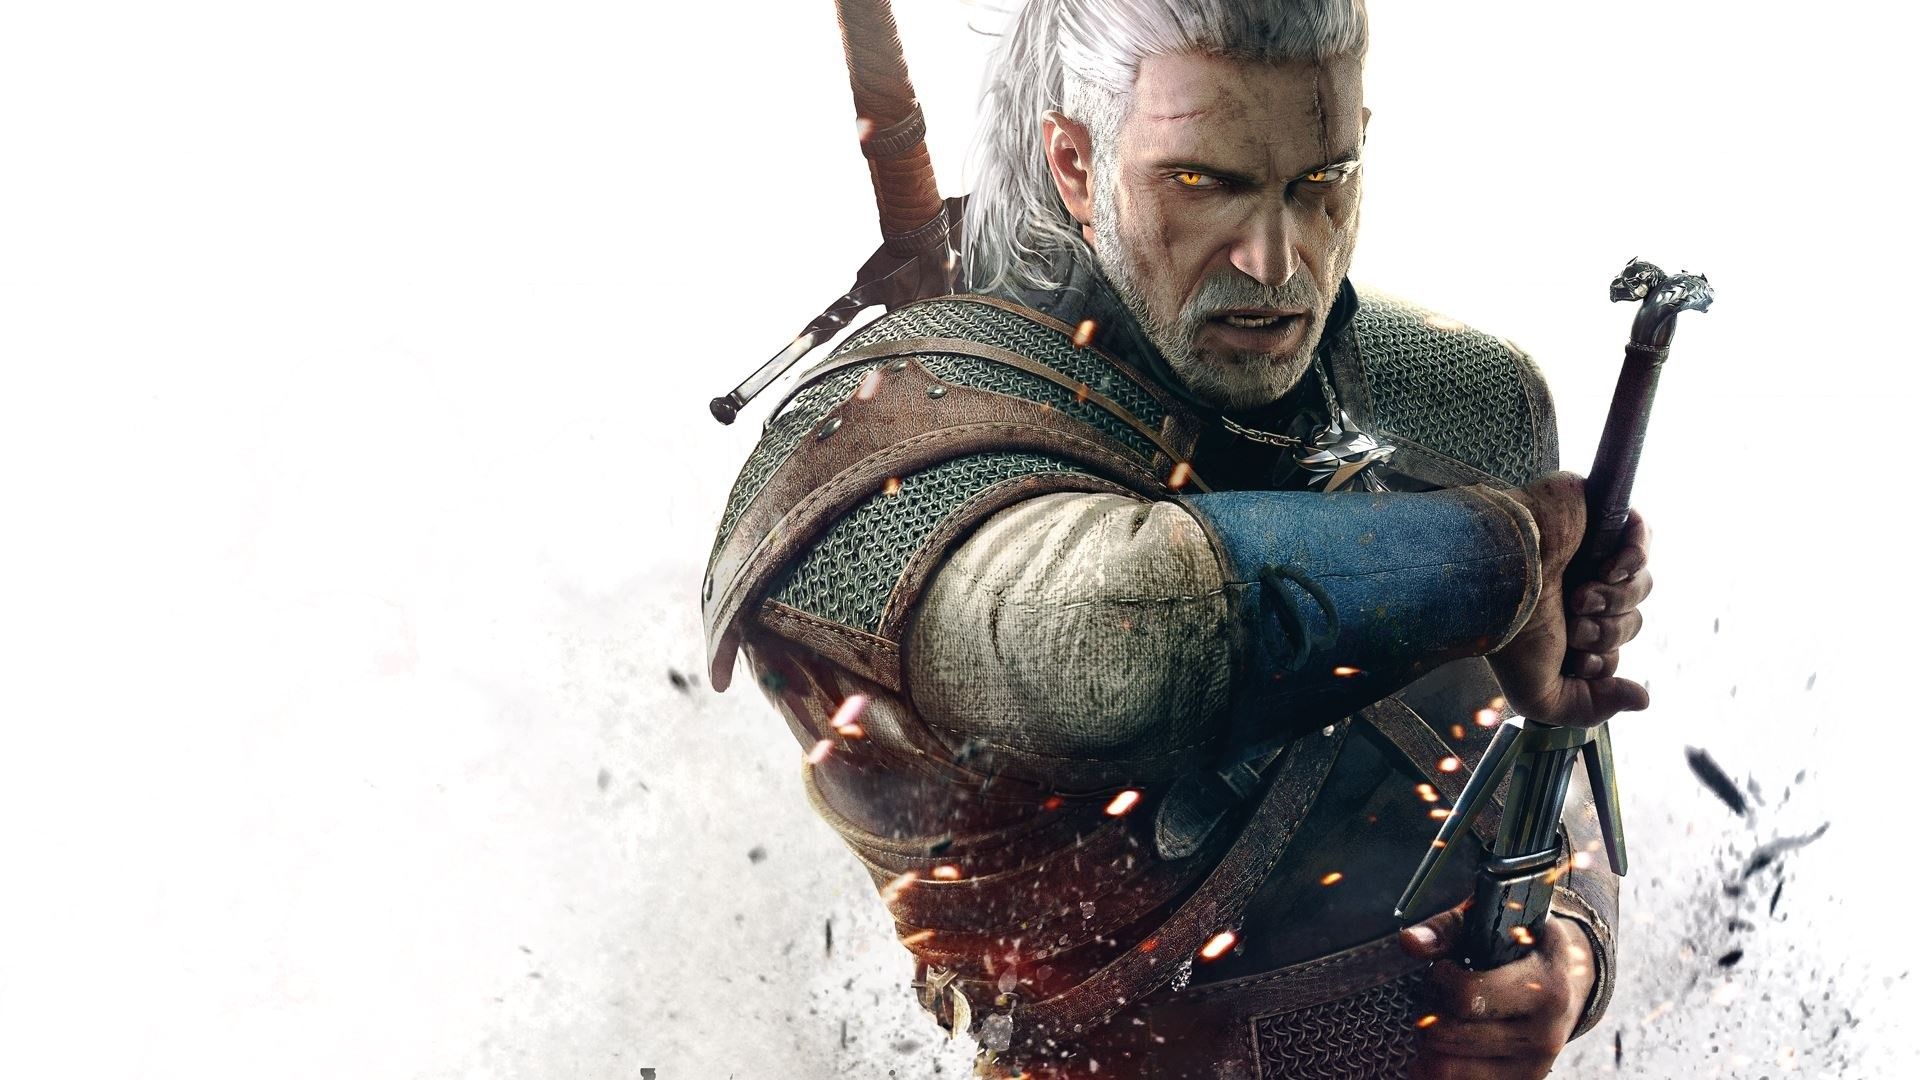 Geralt holstering his sword.